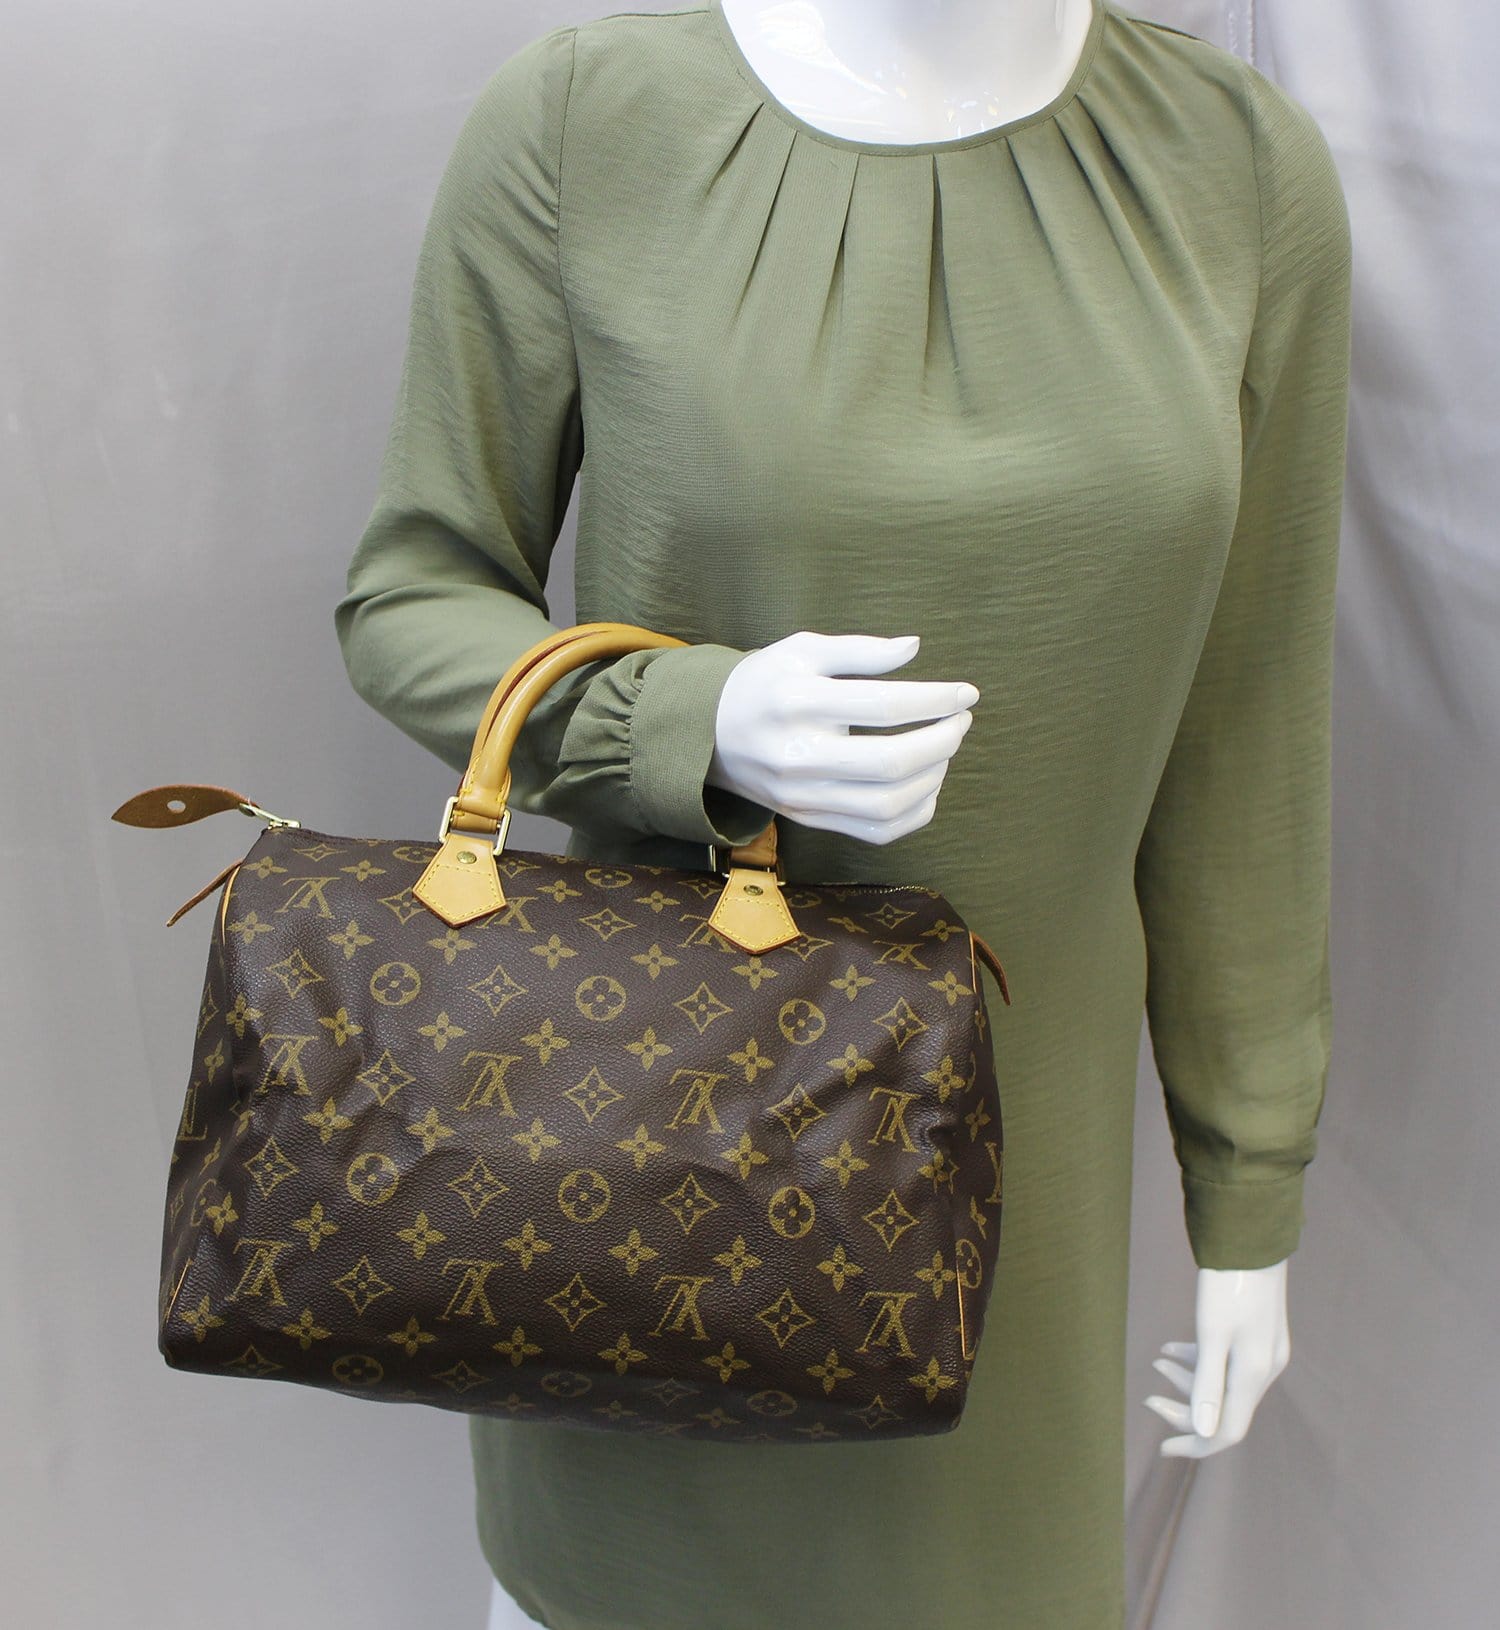 Louis Vuitton Satchel Handbags for Women, Authenticity Guaranteed